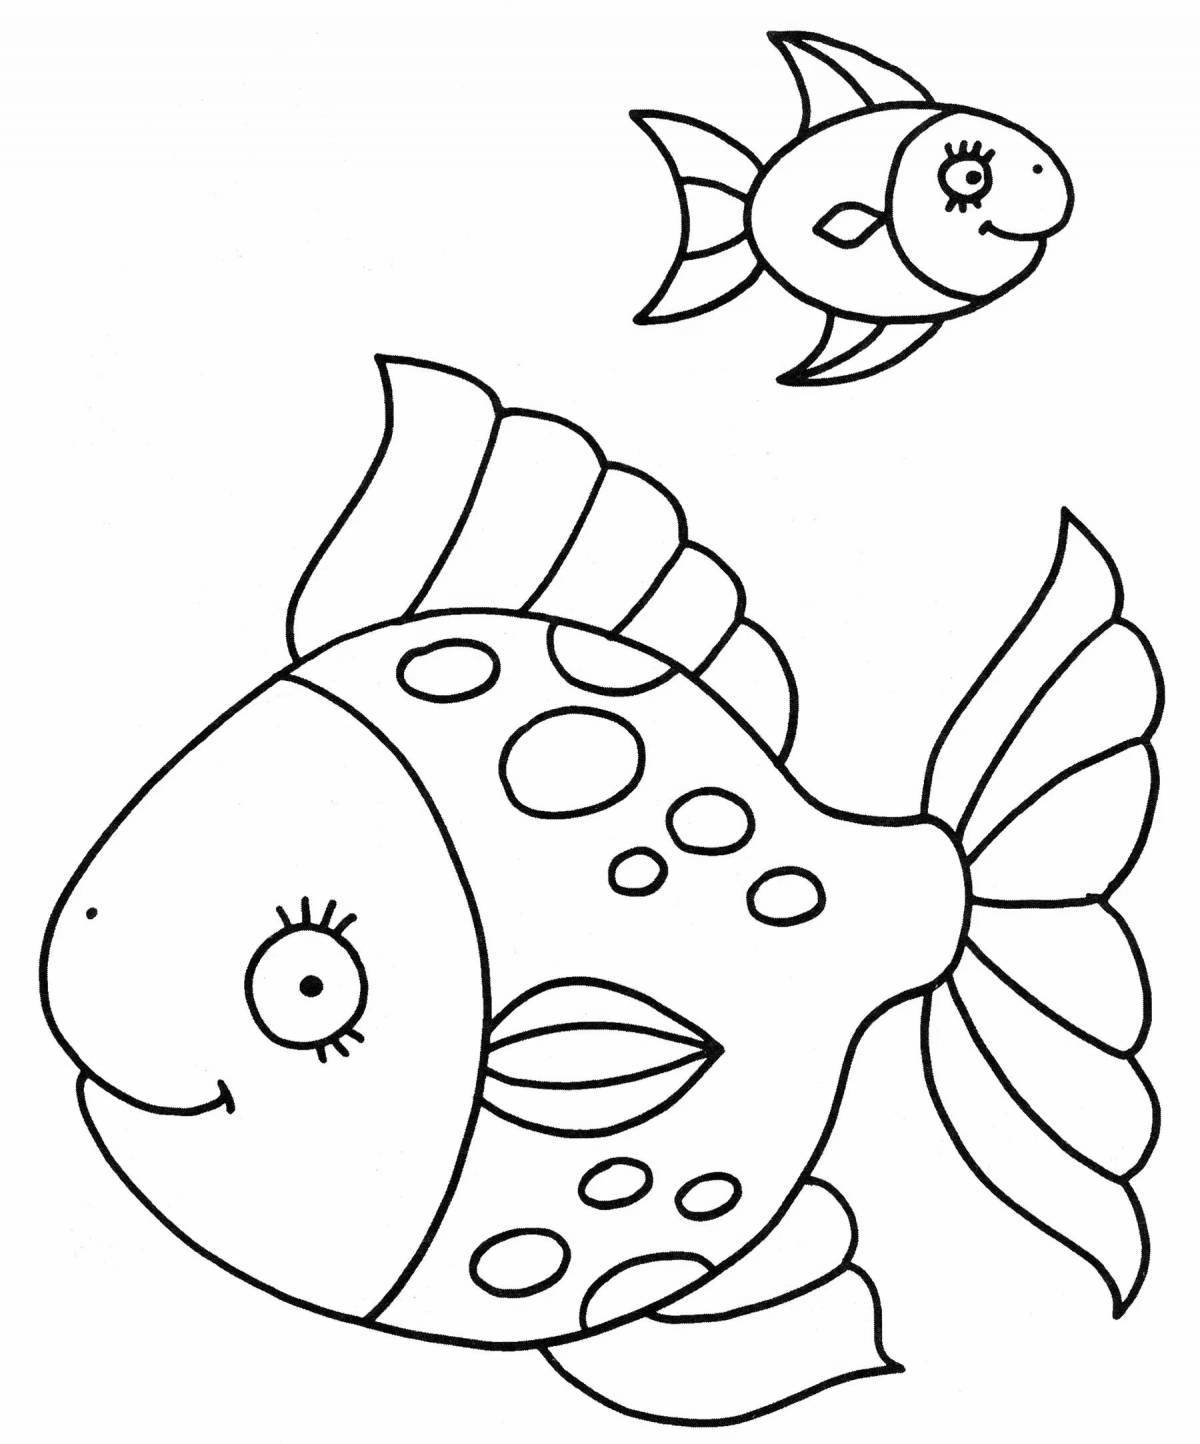 Раскраска рыбы для детей 7 лет. Раскраска рыбка. Рыбка раскраска для детей. Рыба раскраска для детей. Аквариумные рыбки раскраска.